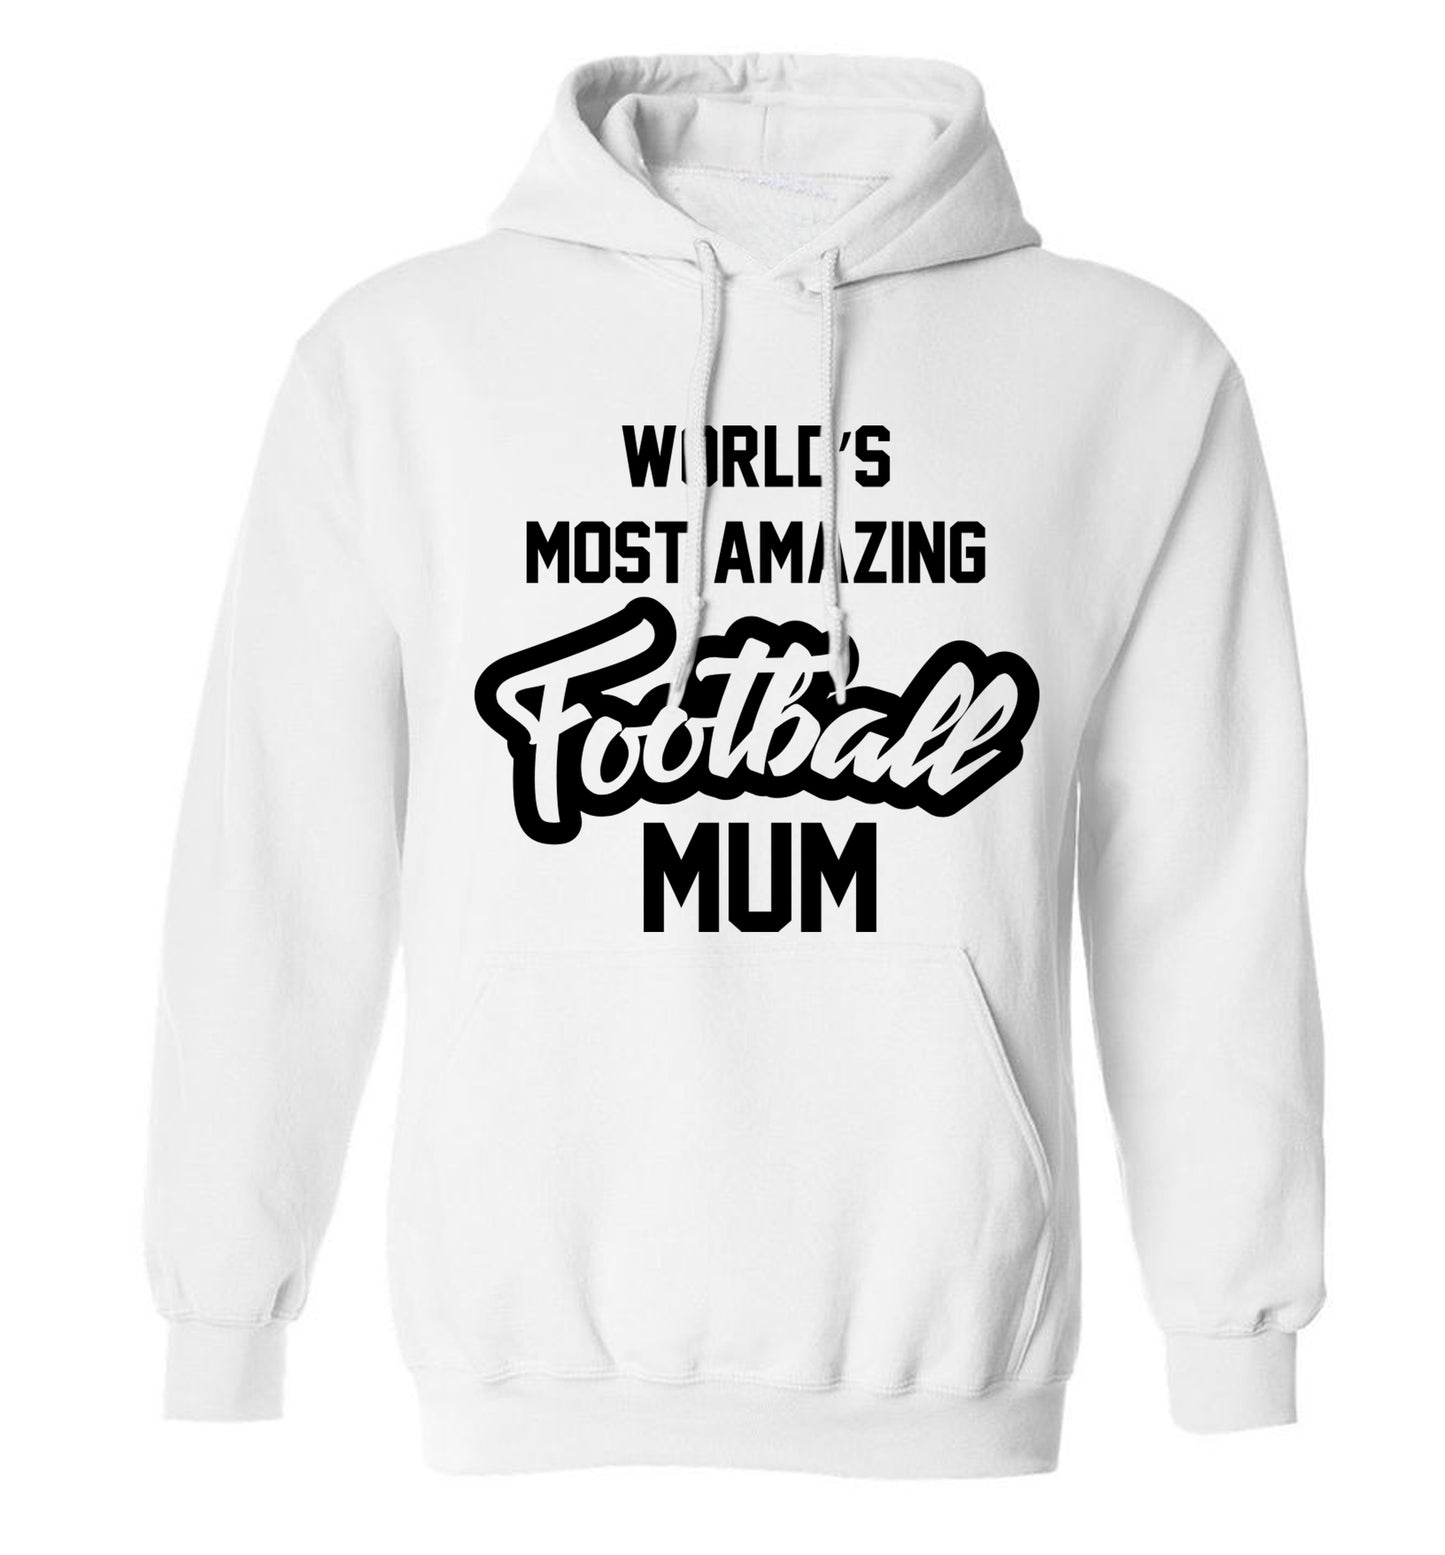 Worlds most amazing football mum adults unisexwhite hoodie 2XL